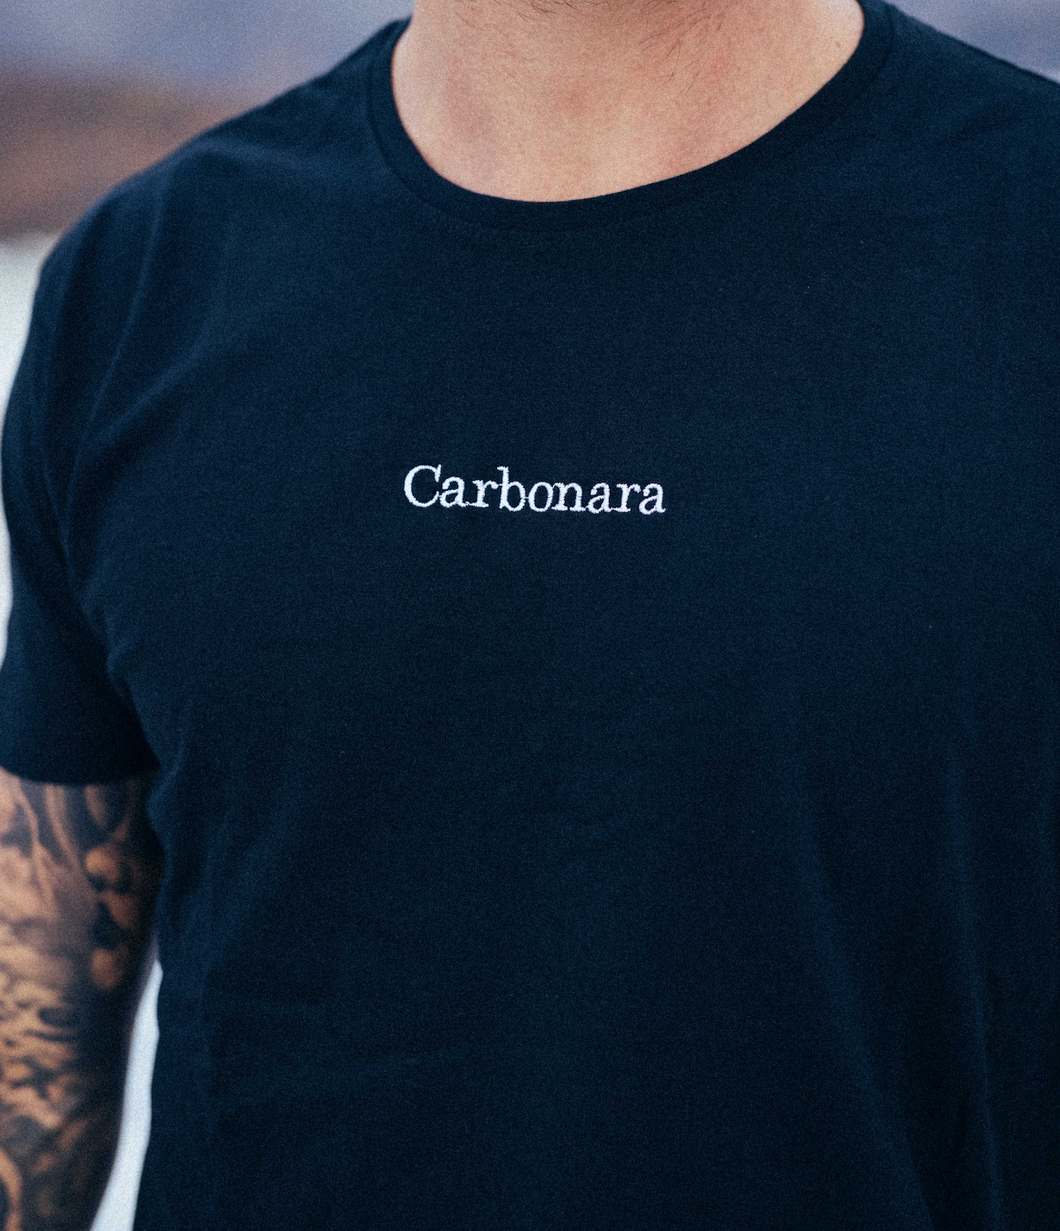 T-shirt “CARBONARA” - Pietro Ballino